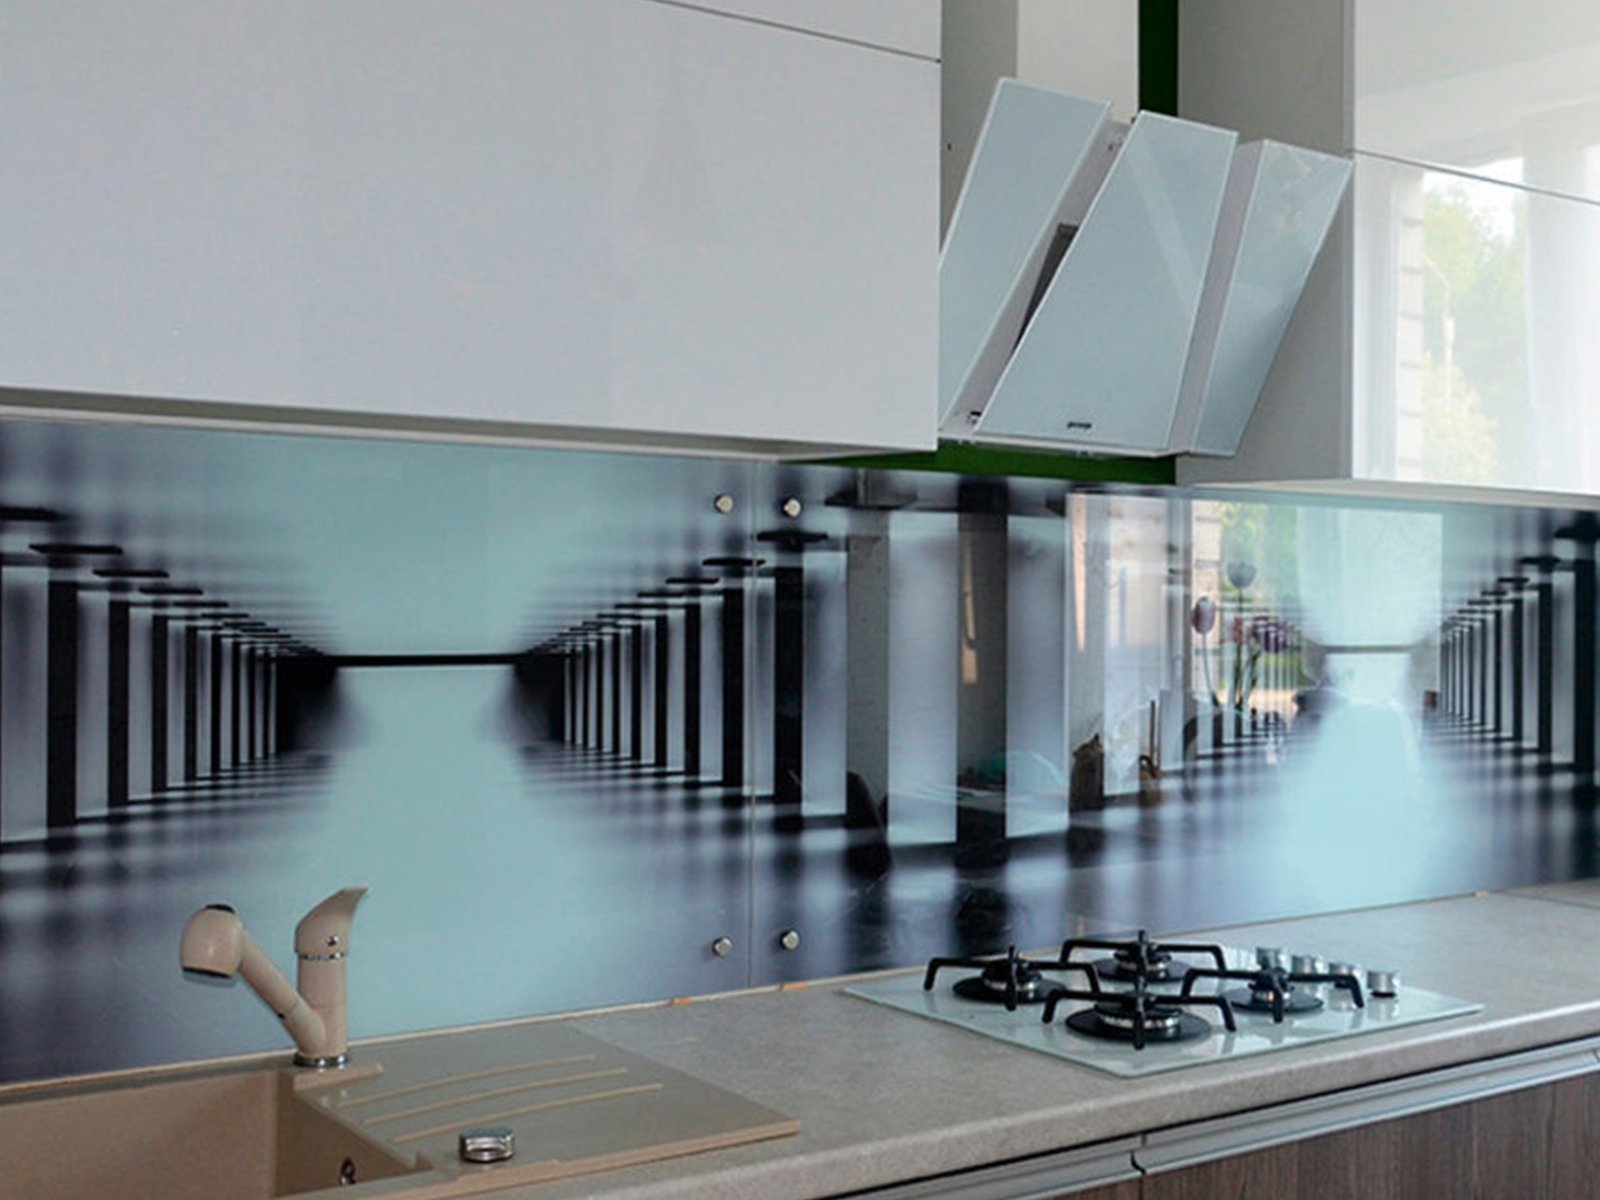 стекло на фартук для кухни прозрачное для кухни